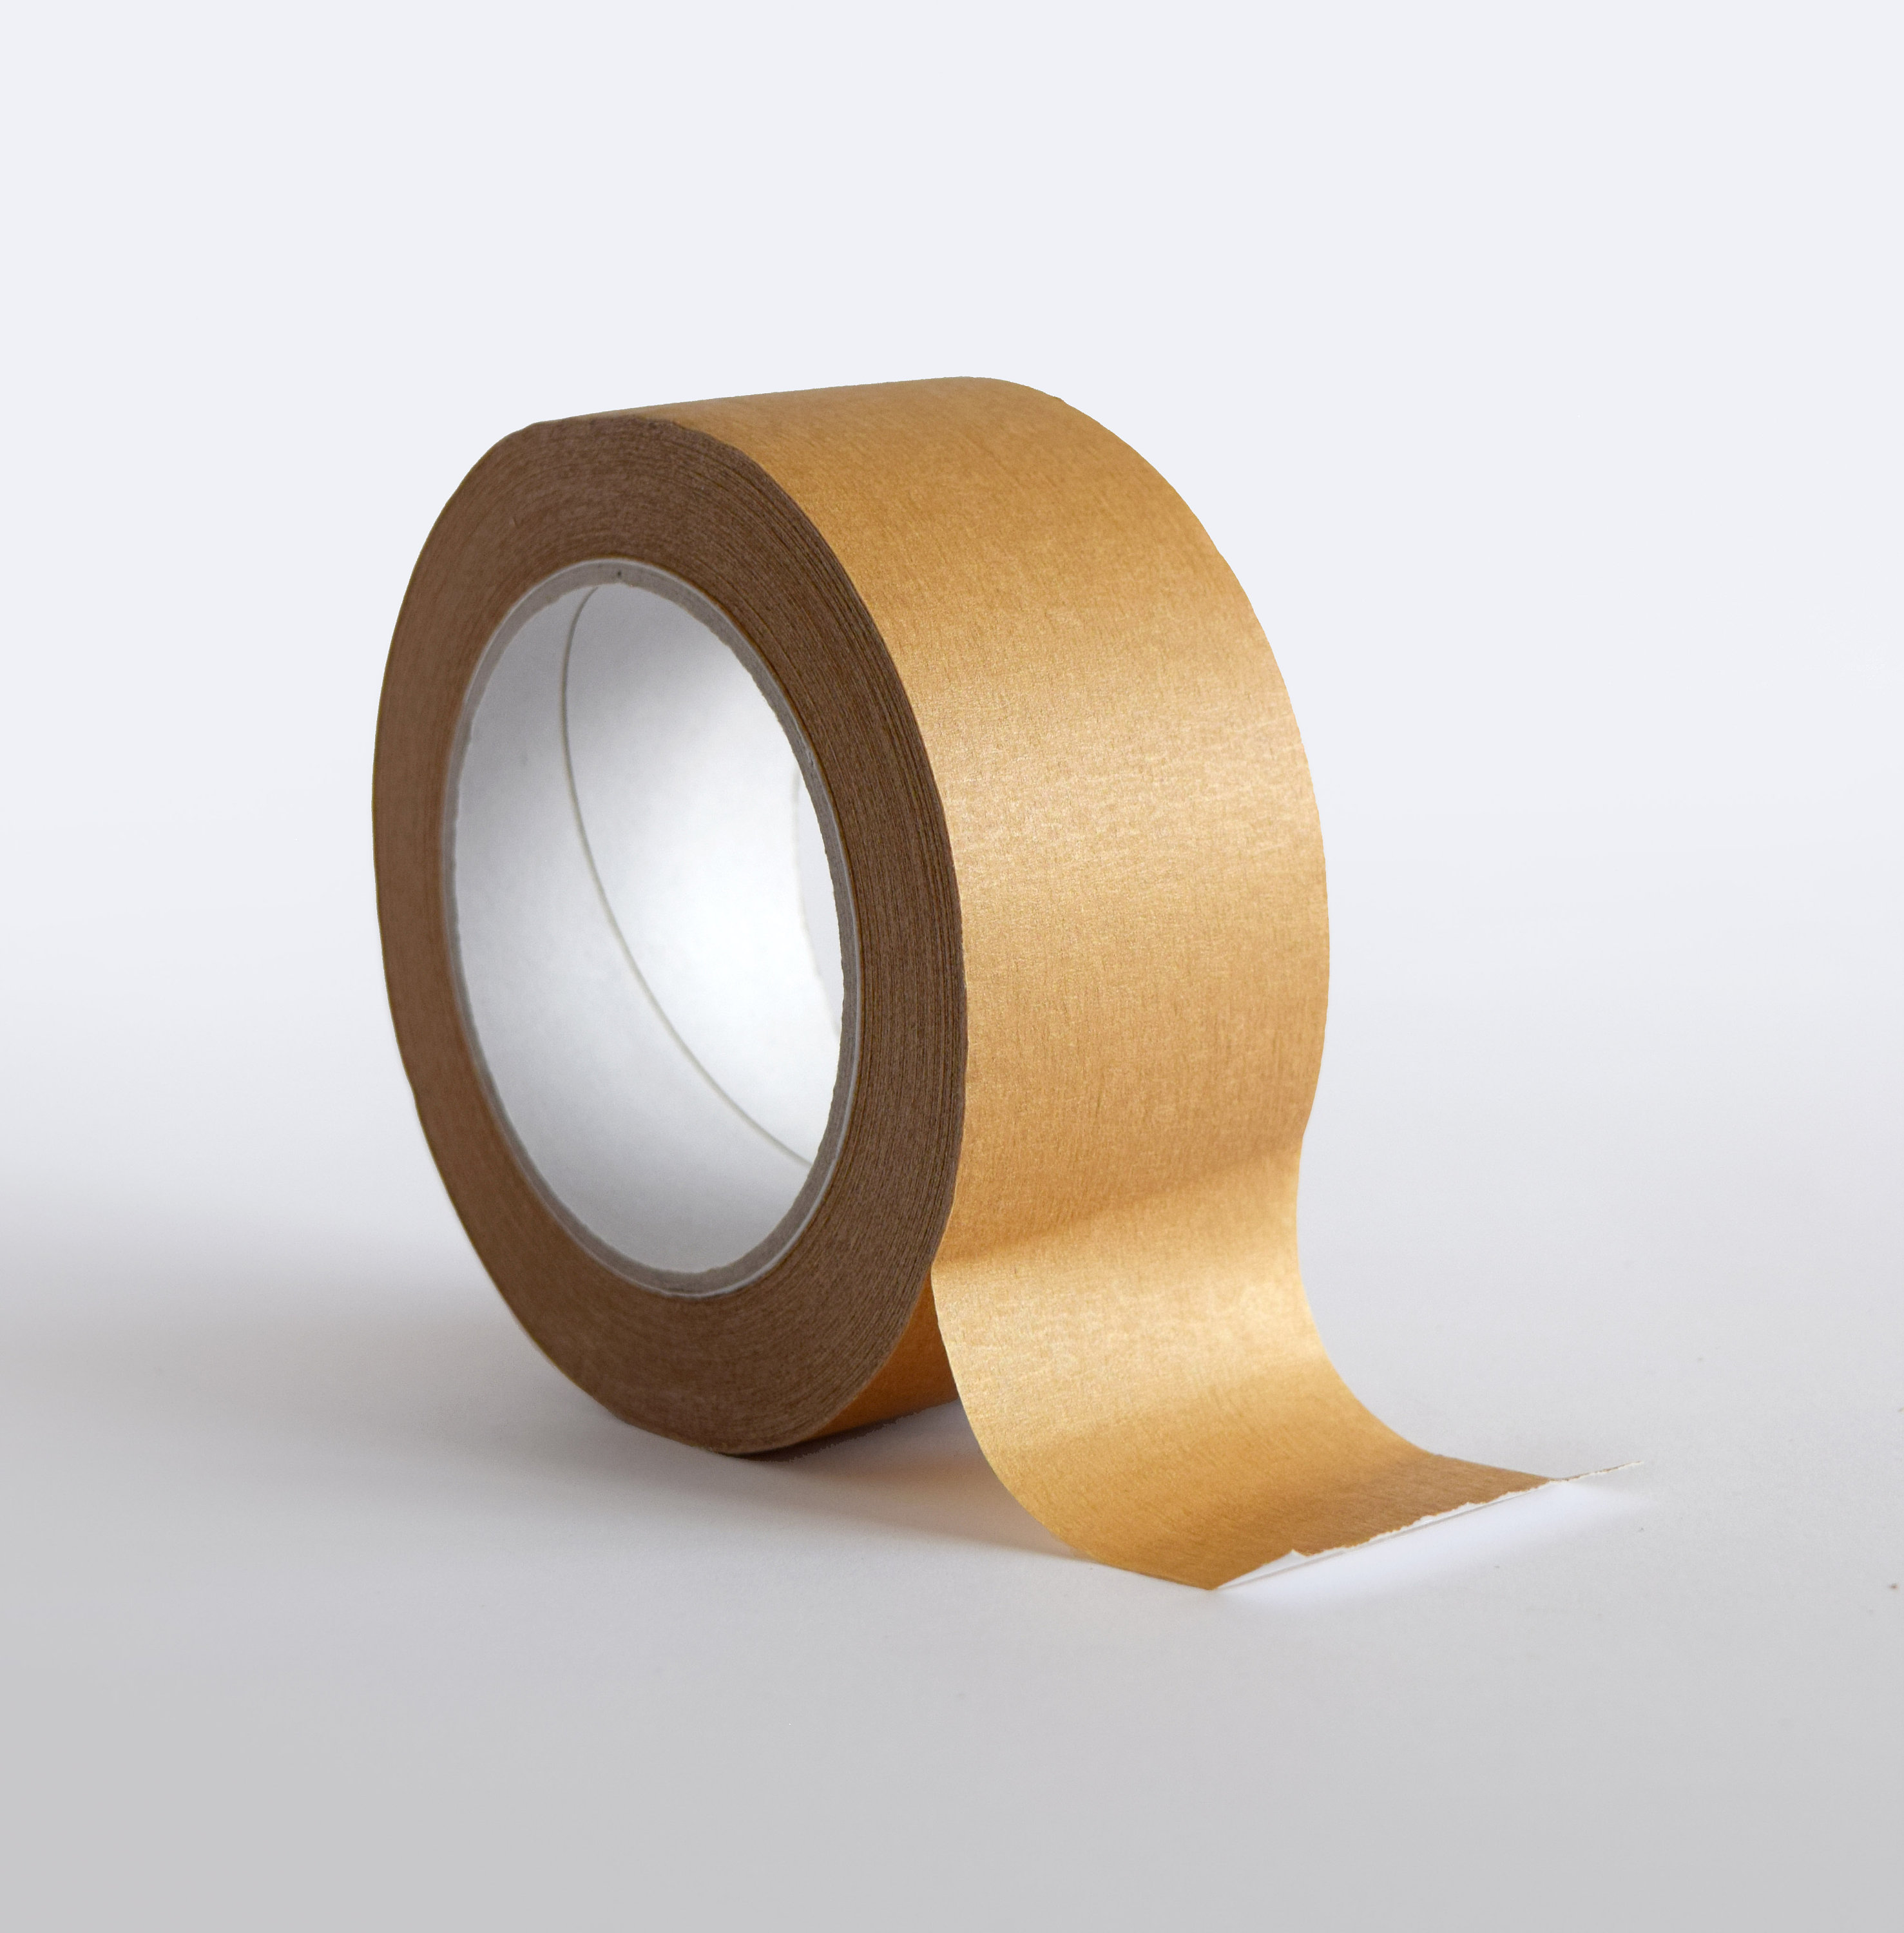 3 Pcs. Kraft Paper Packaging Tape, Kraft Brown Self-adhesive